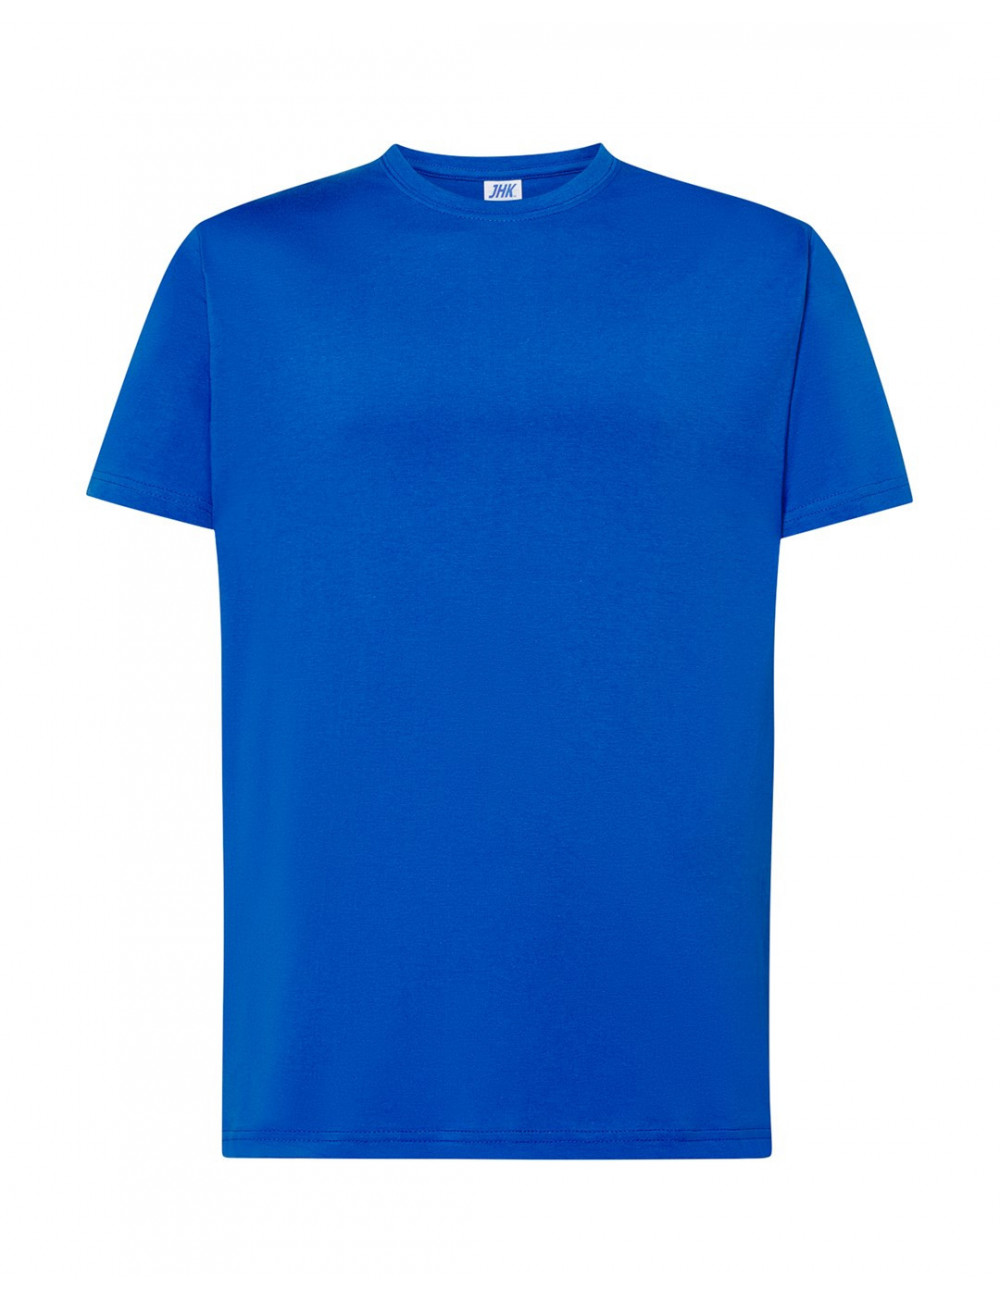 Koszulka męska tsra 170 regular hit t-shirt royal niebieski Jhk